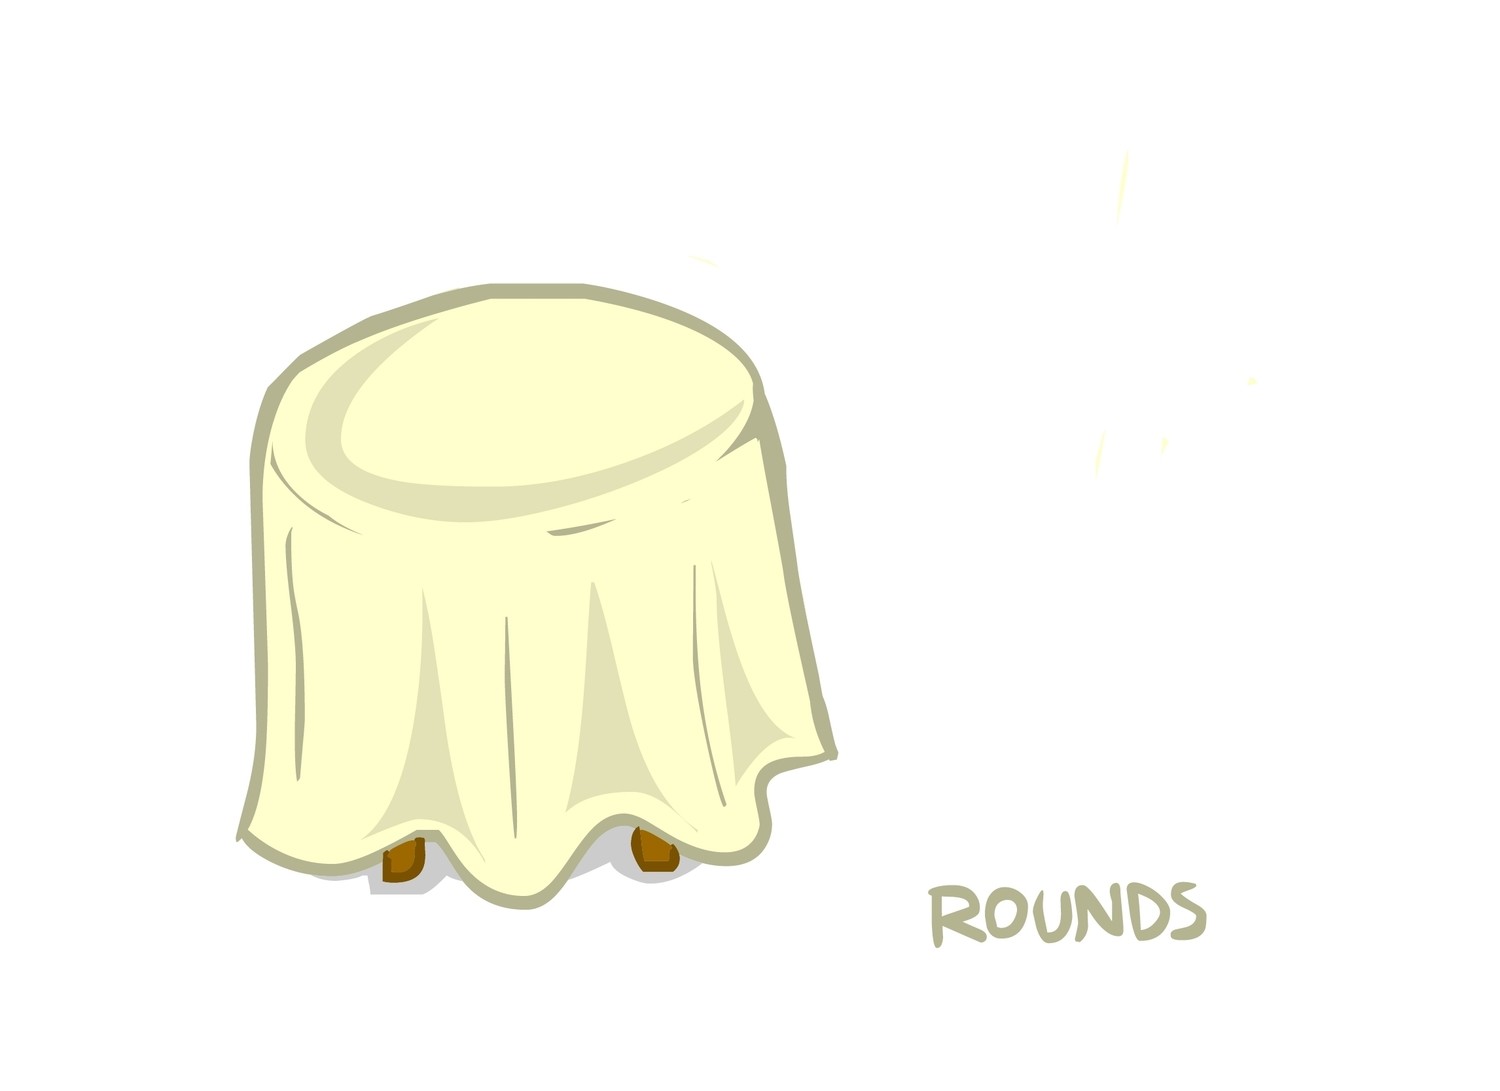 Clove Lace Round Tablecloths